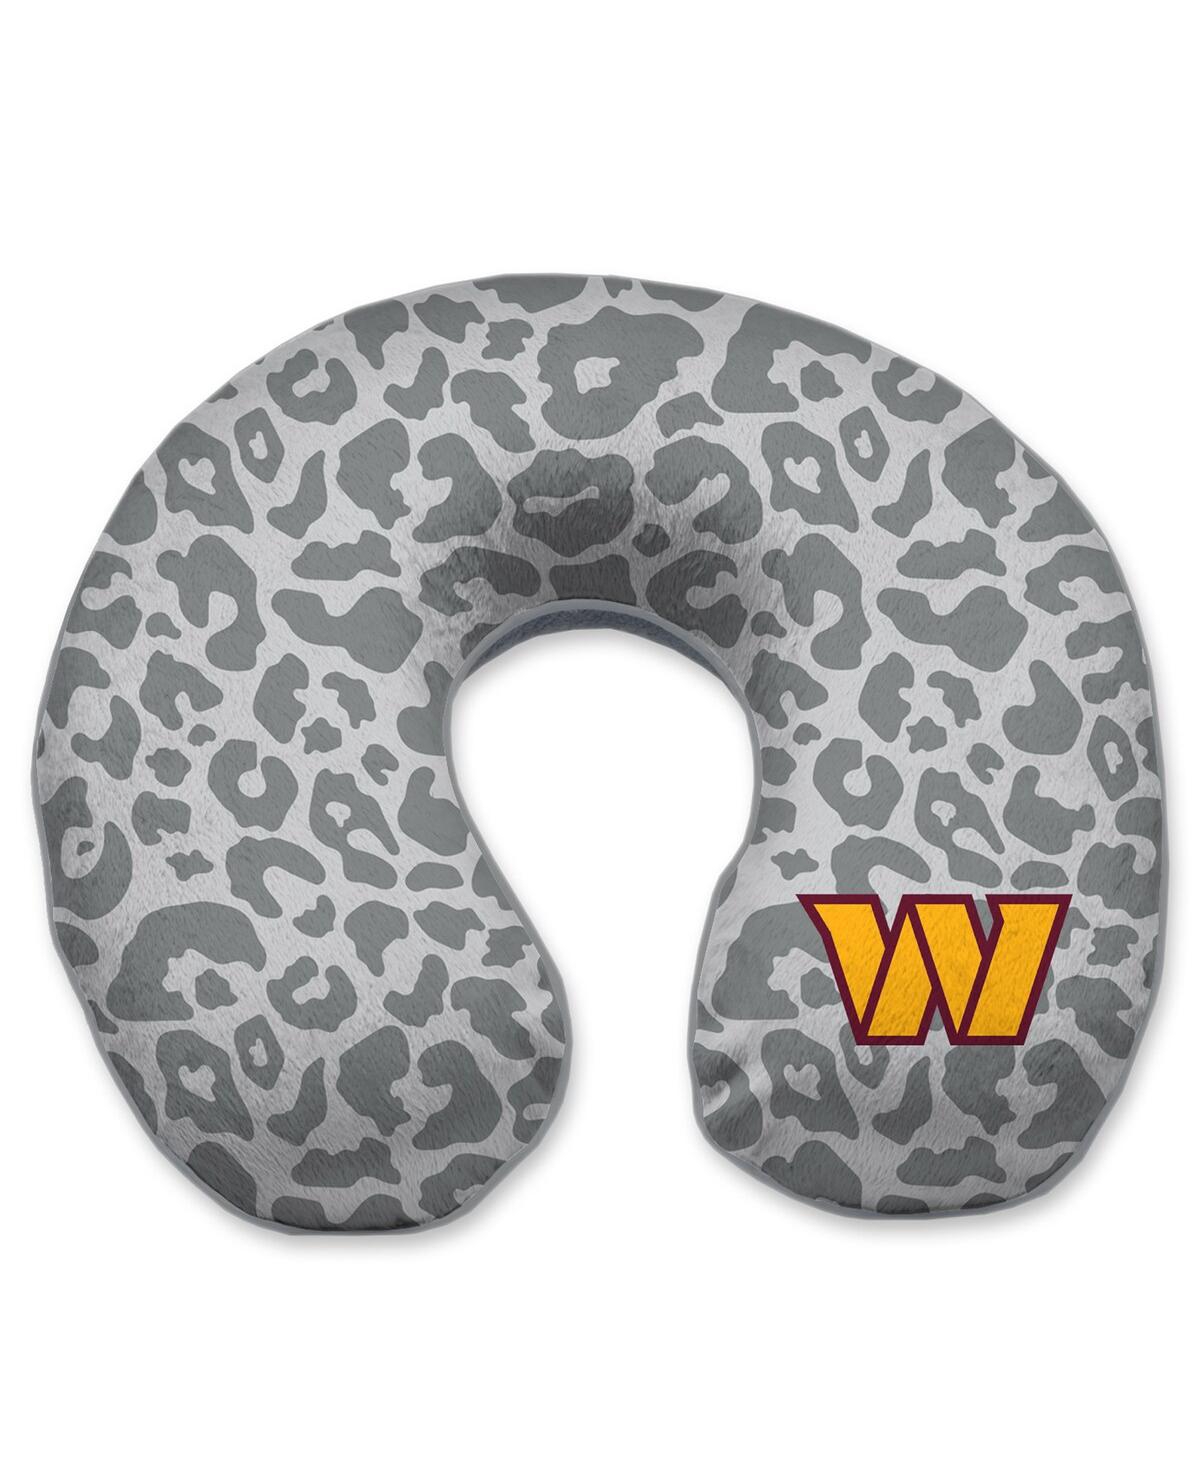 Washington Commanders Cheetah Print Memory Foam Travel Pillow - Gray